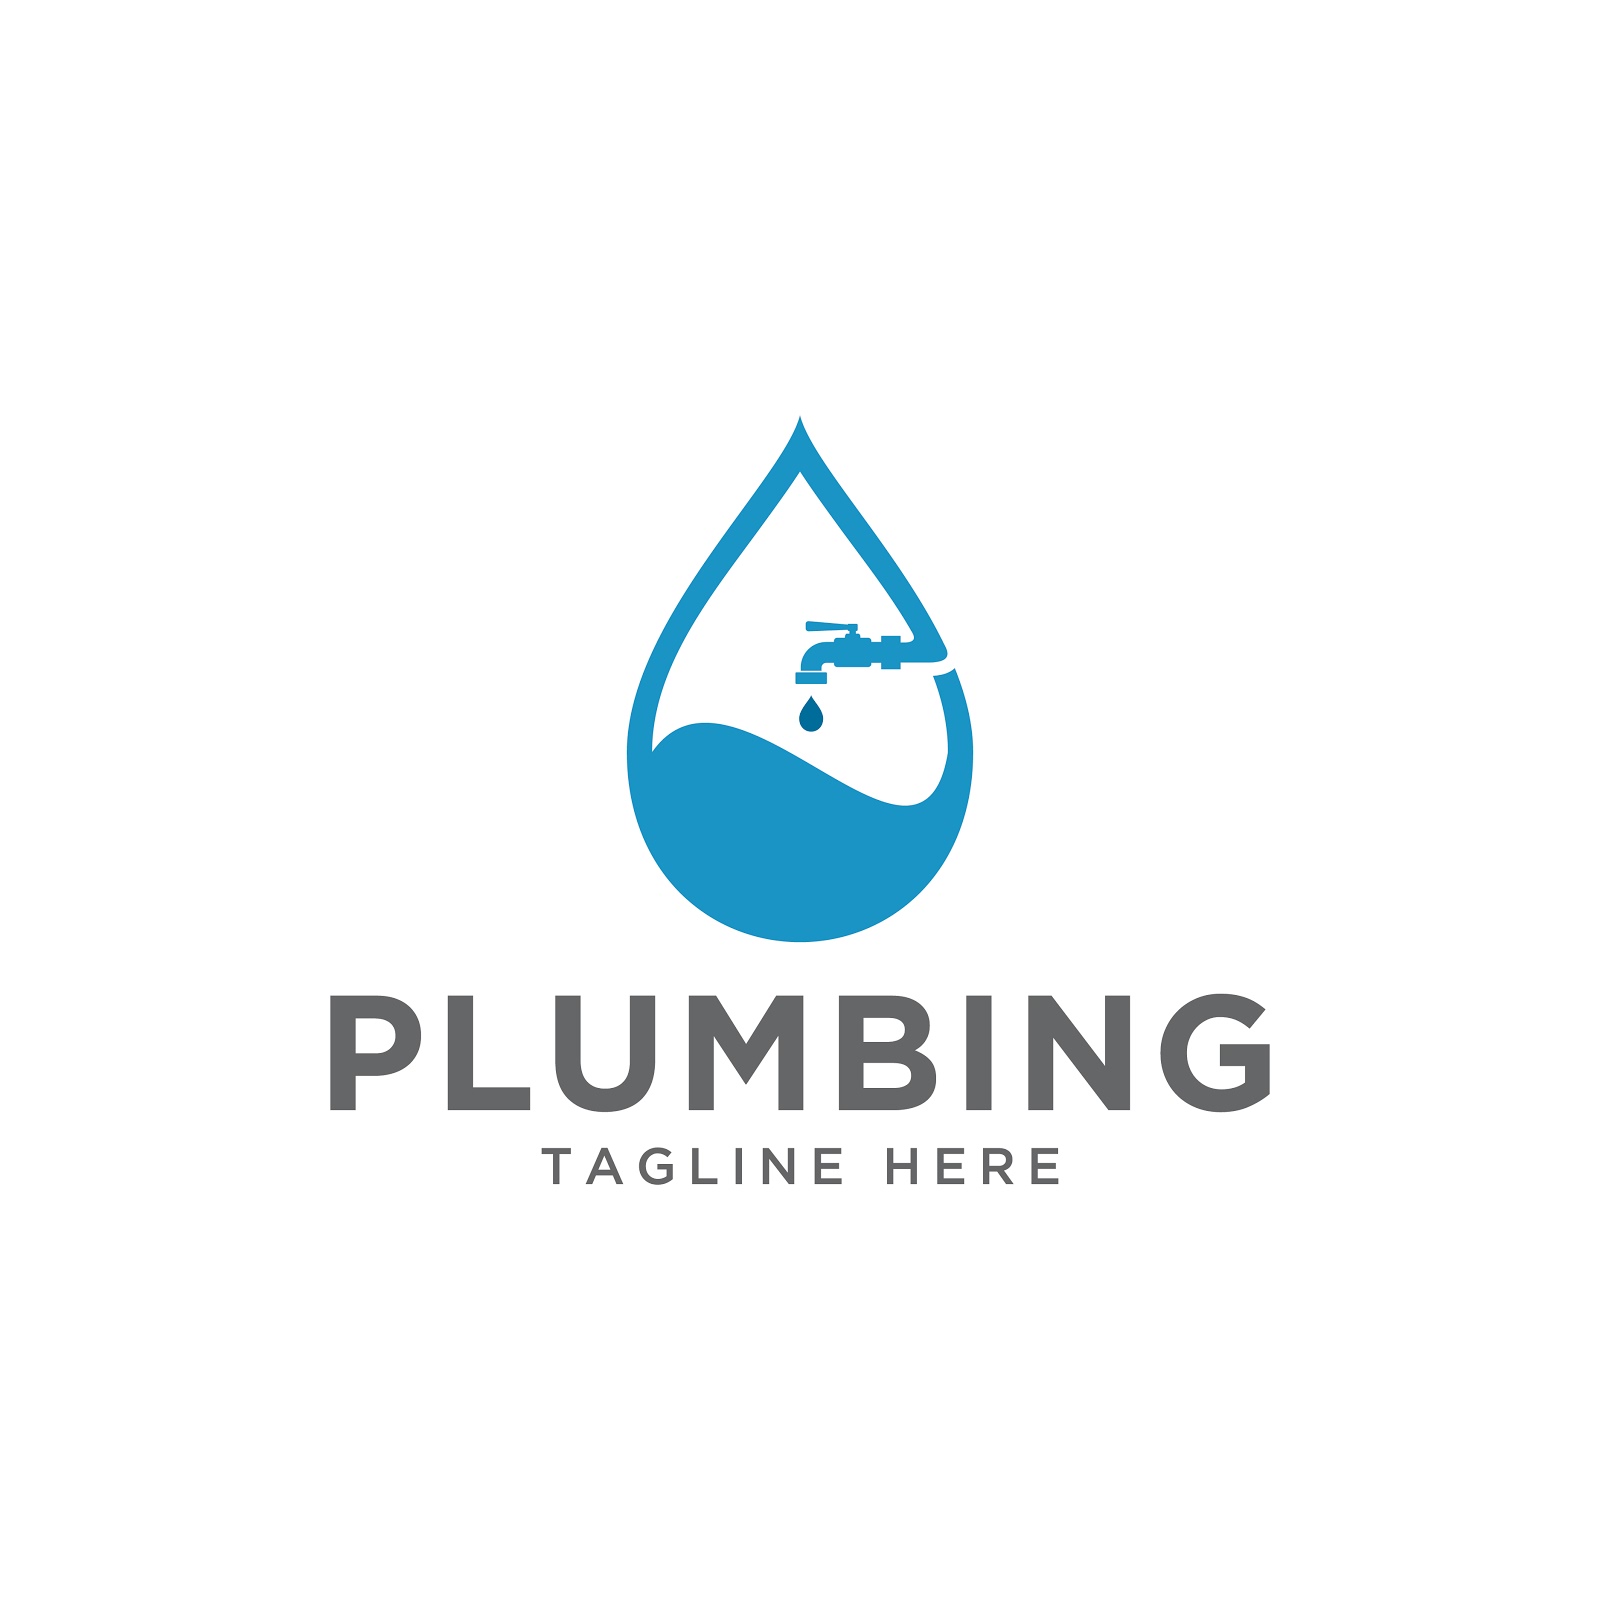 plumbing logo ideas 1